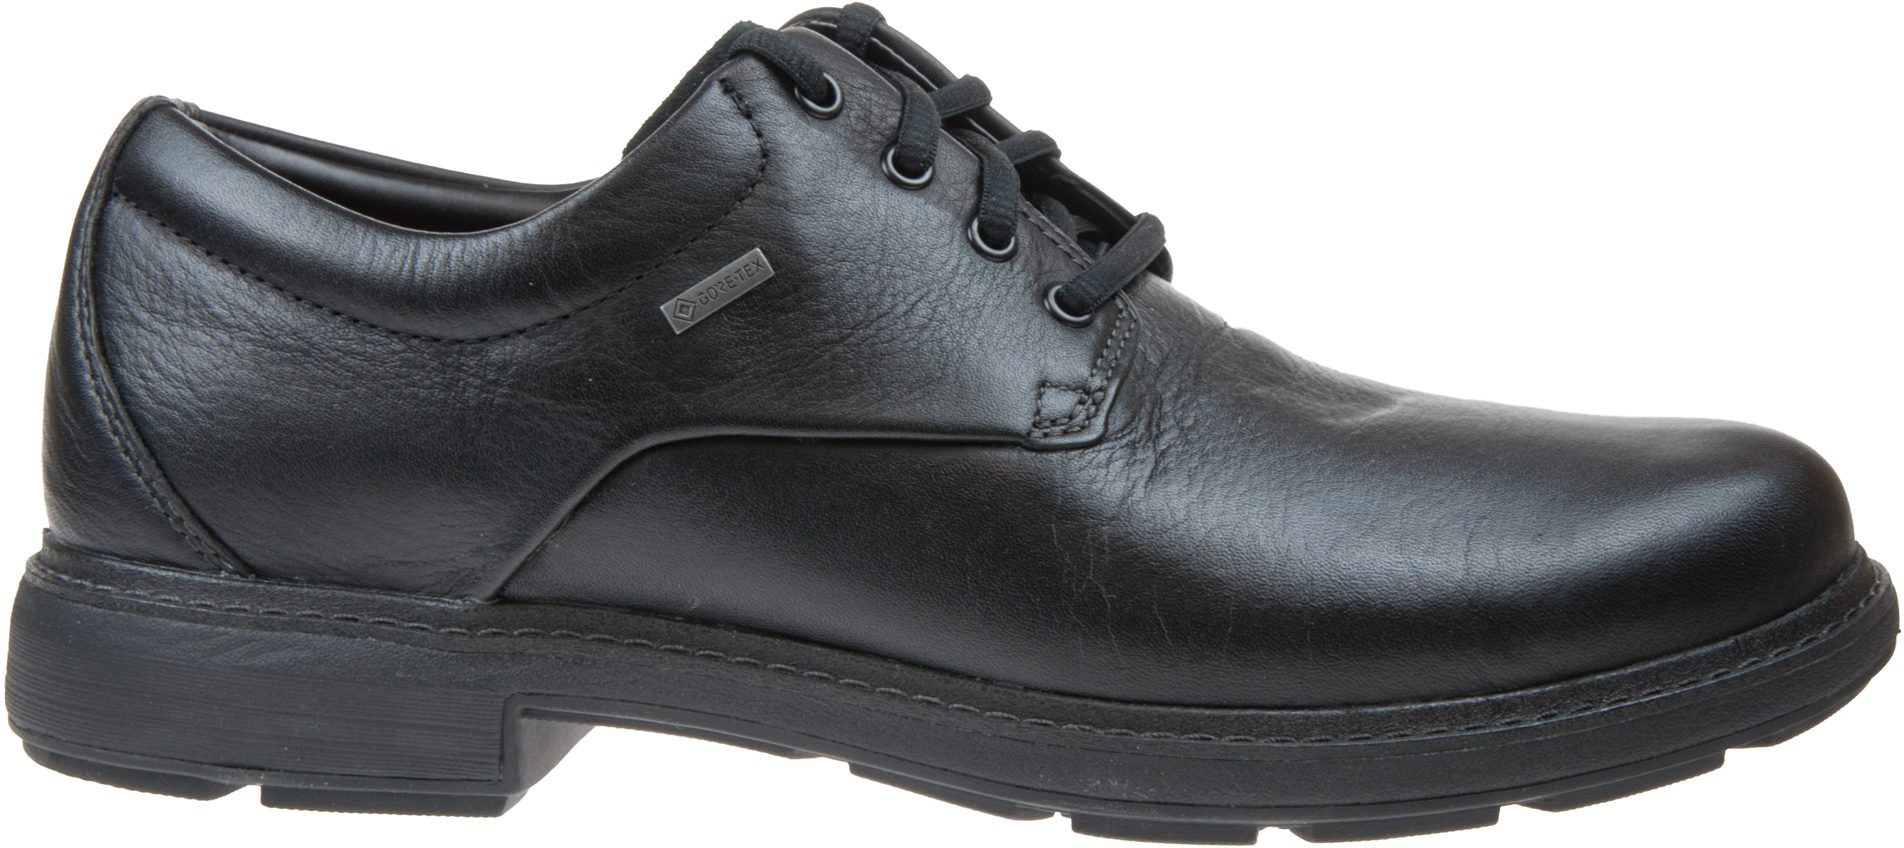 Clarks Un Tread Lo Gore-Tex Black Leather 26145451 - Casual Shoes ...